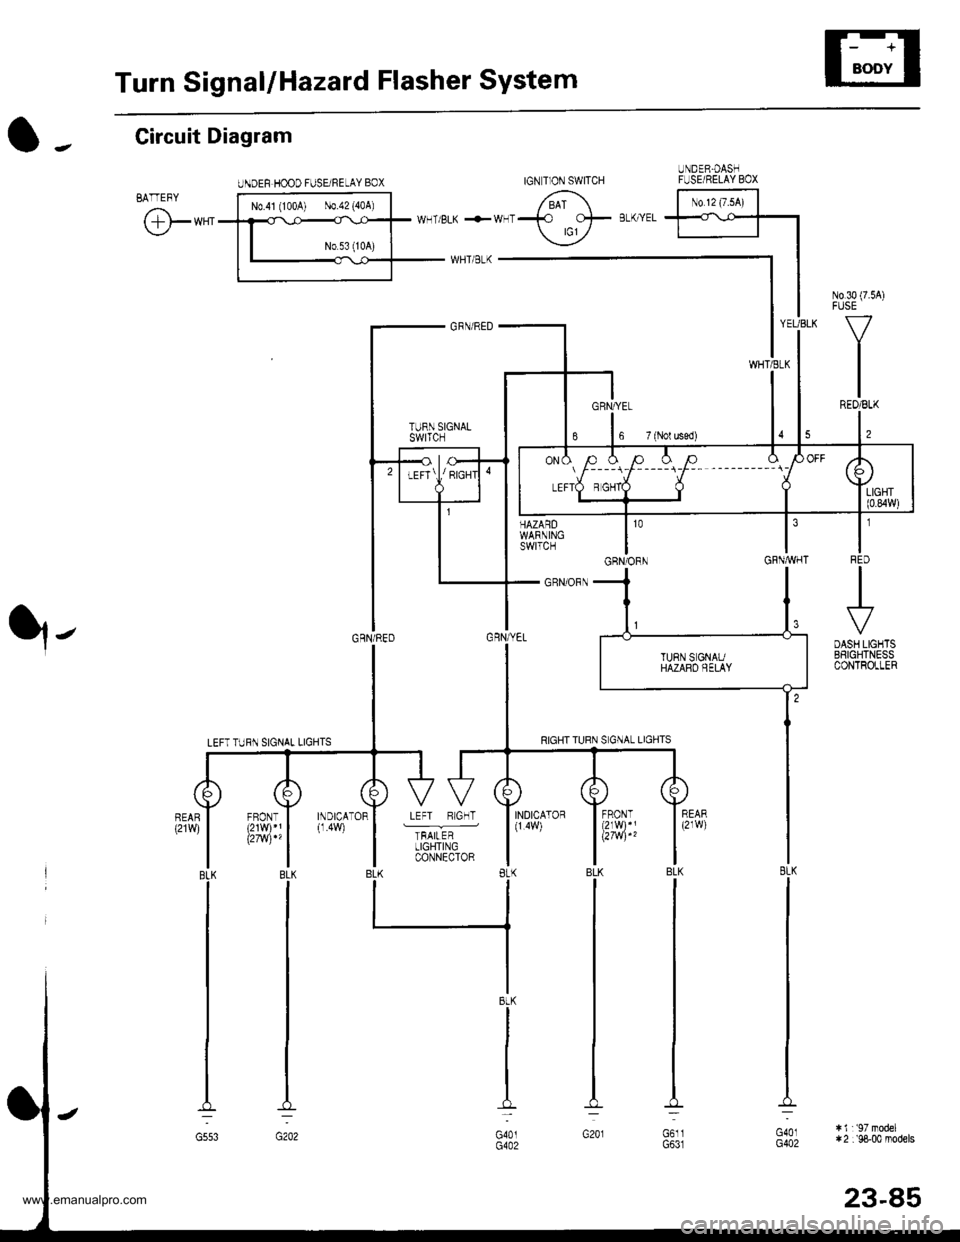 HONDA CR-V 1997 RD1-RD3 / 1.G Workshop Manual 
Turn SignallHazard Flasher System
UNDEF HOOD FUSE/NELAY BOX
N0.30 (7.54)FUSE
V
IREO/BLK
l,
tIFqD
.+
DASH LIGHTSBSIGHTNESSCONTROLLER
HAZARDWARNINGswtTcH
_ GRN/ORN
YEUBLK
WHTiELK
GRNAVHT
O -. Circuit 